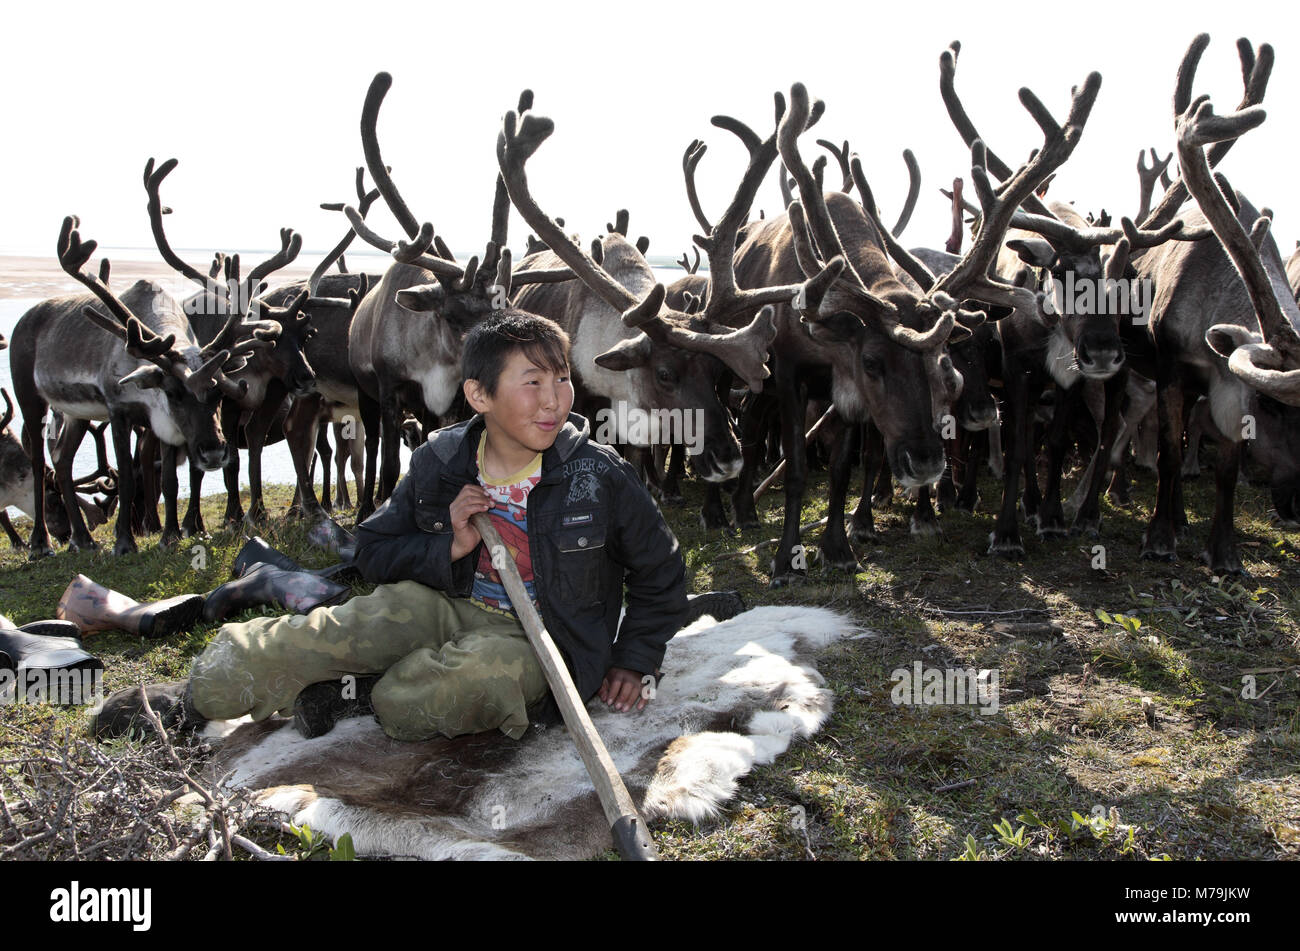 Asia, Russia, Siberia, region of Krasnojarsk, Taimyr peninsula, reindeers, reindeer herds, child, boy, Stock Photo